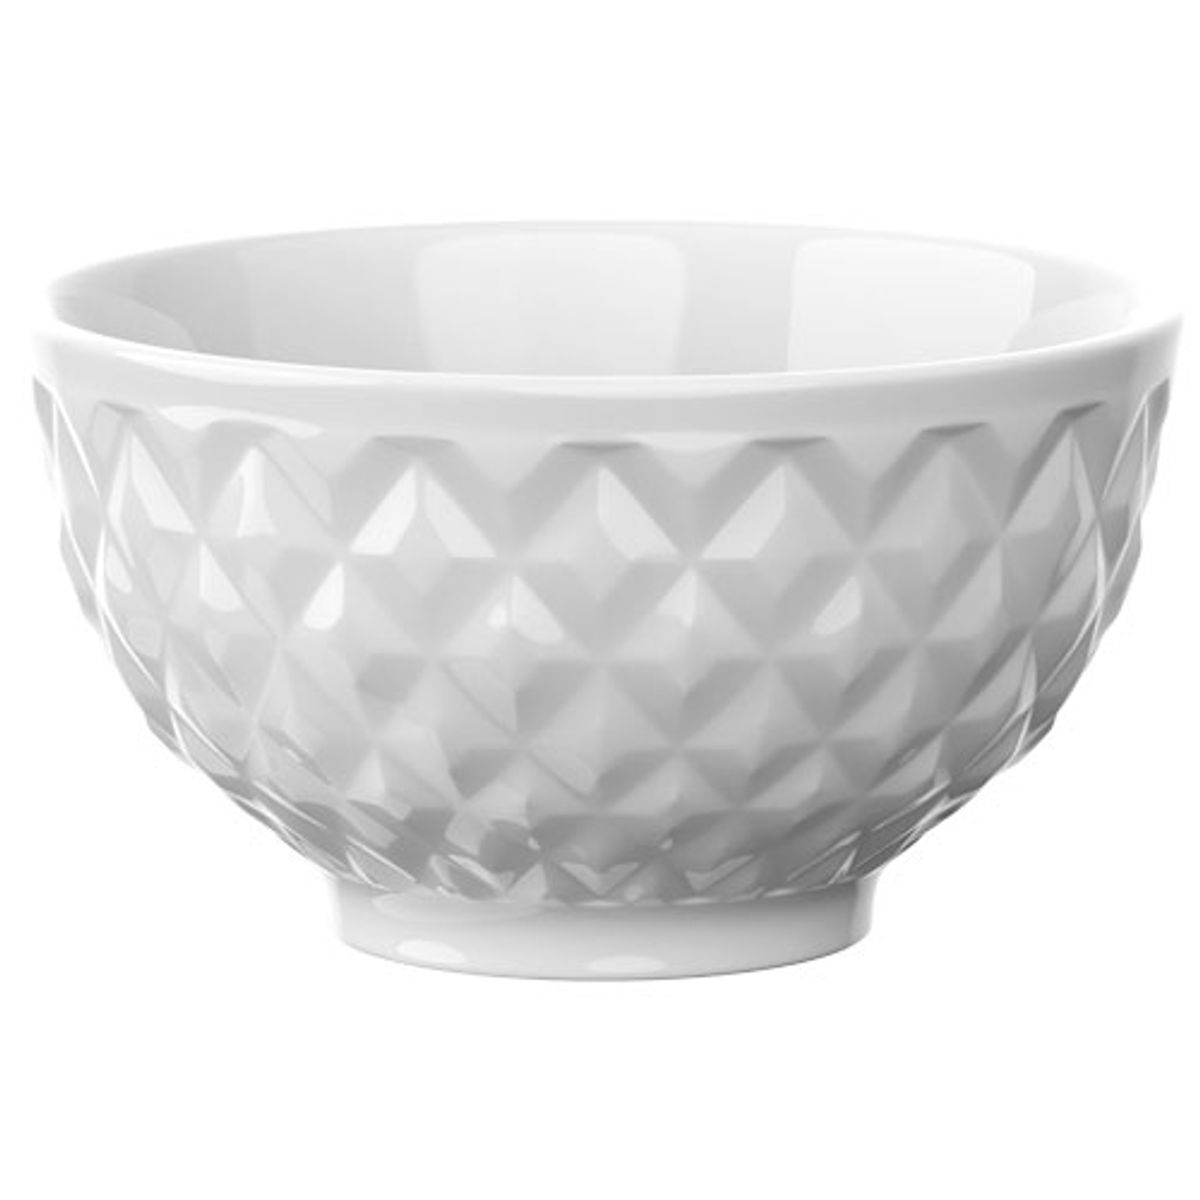 Bowl de Porcelana Dynasty Branca 350ml